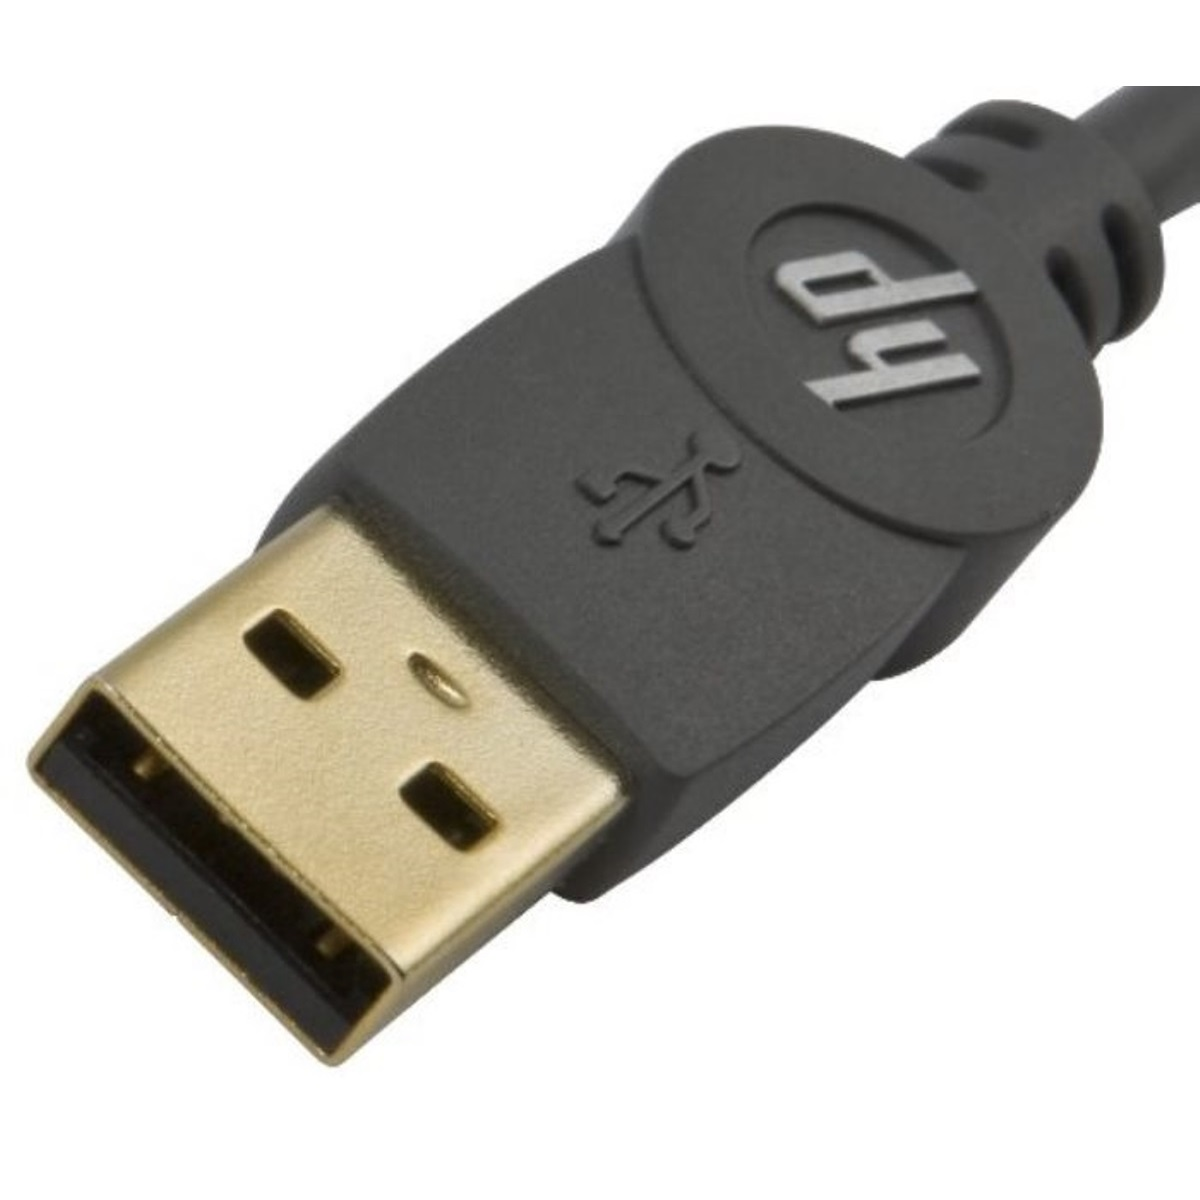 HP MONSTER CABLE 0,9m Mini-USB Mini-USB-Kabel Kabel, Schwarz High-Speed